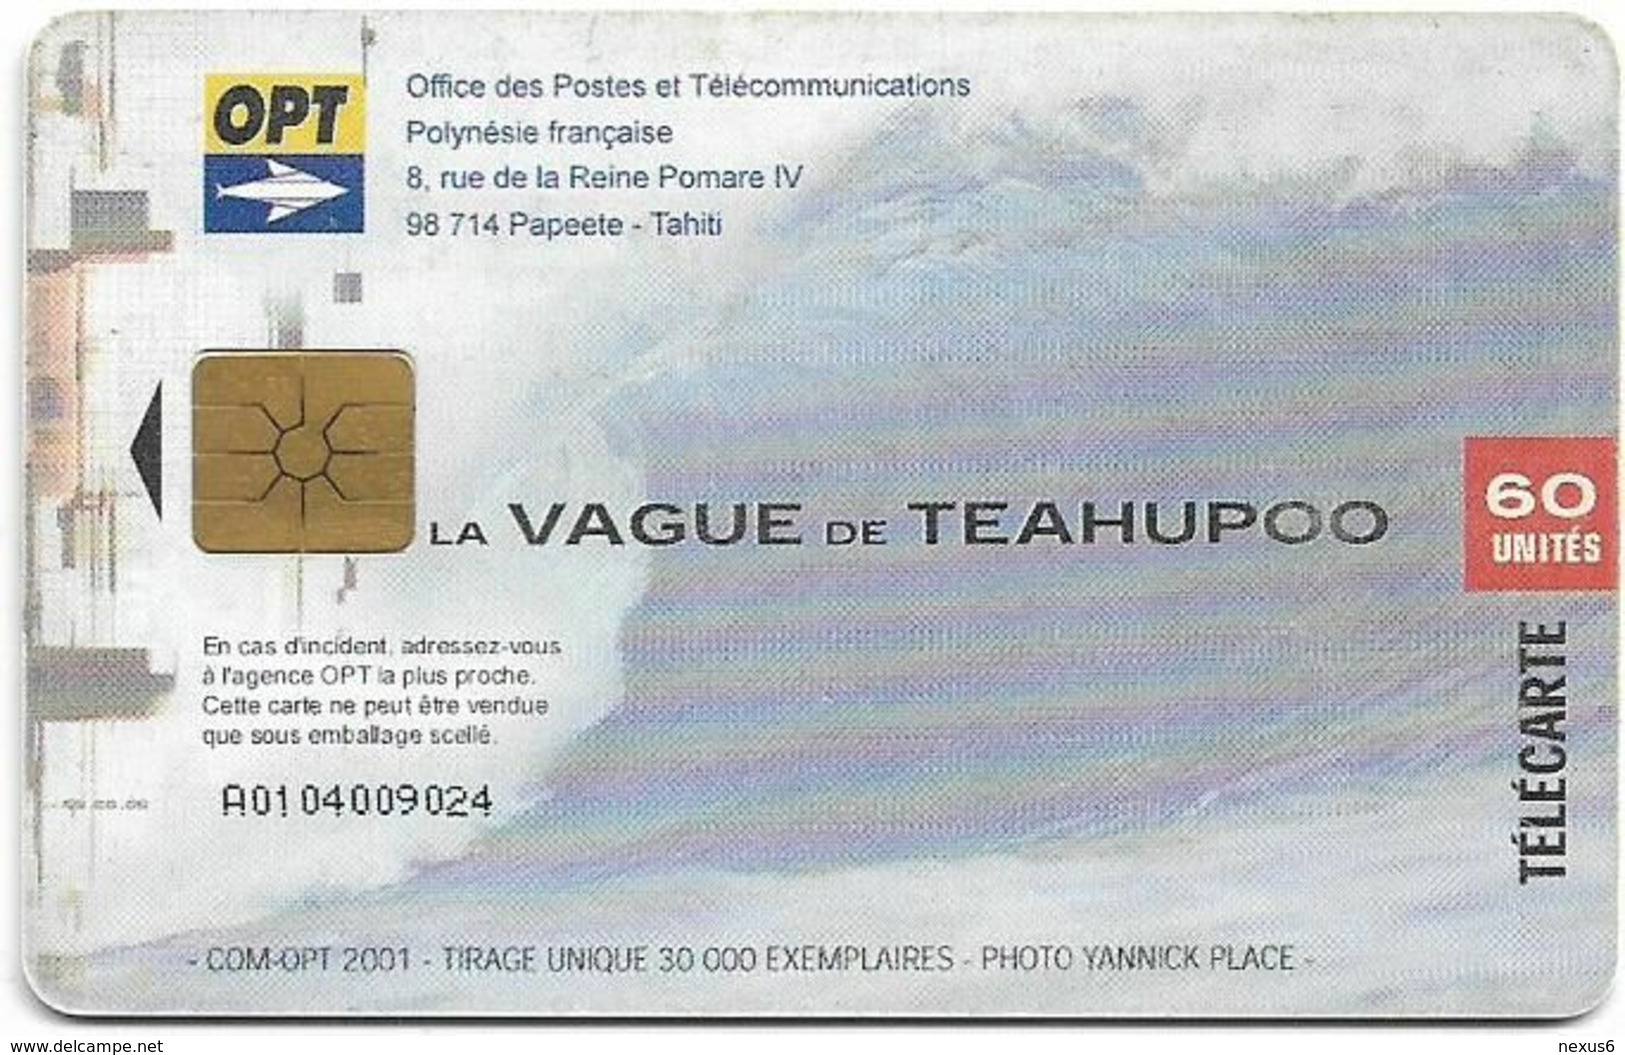 French Polynesia - OPT - La Vague De Teahupoo - Gem1B Not Symm. White/Gold, 05.2001, 60Units, 30.000ex, Used - Polynésie Française